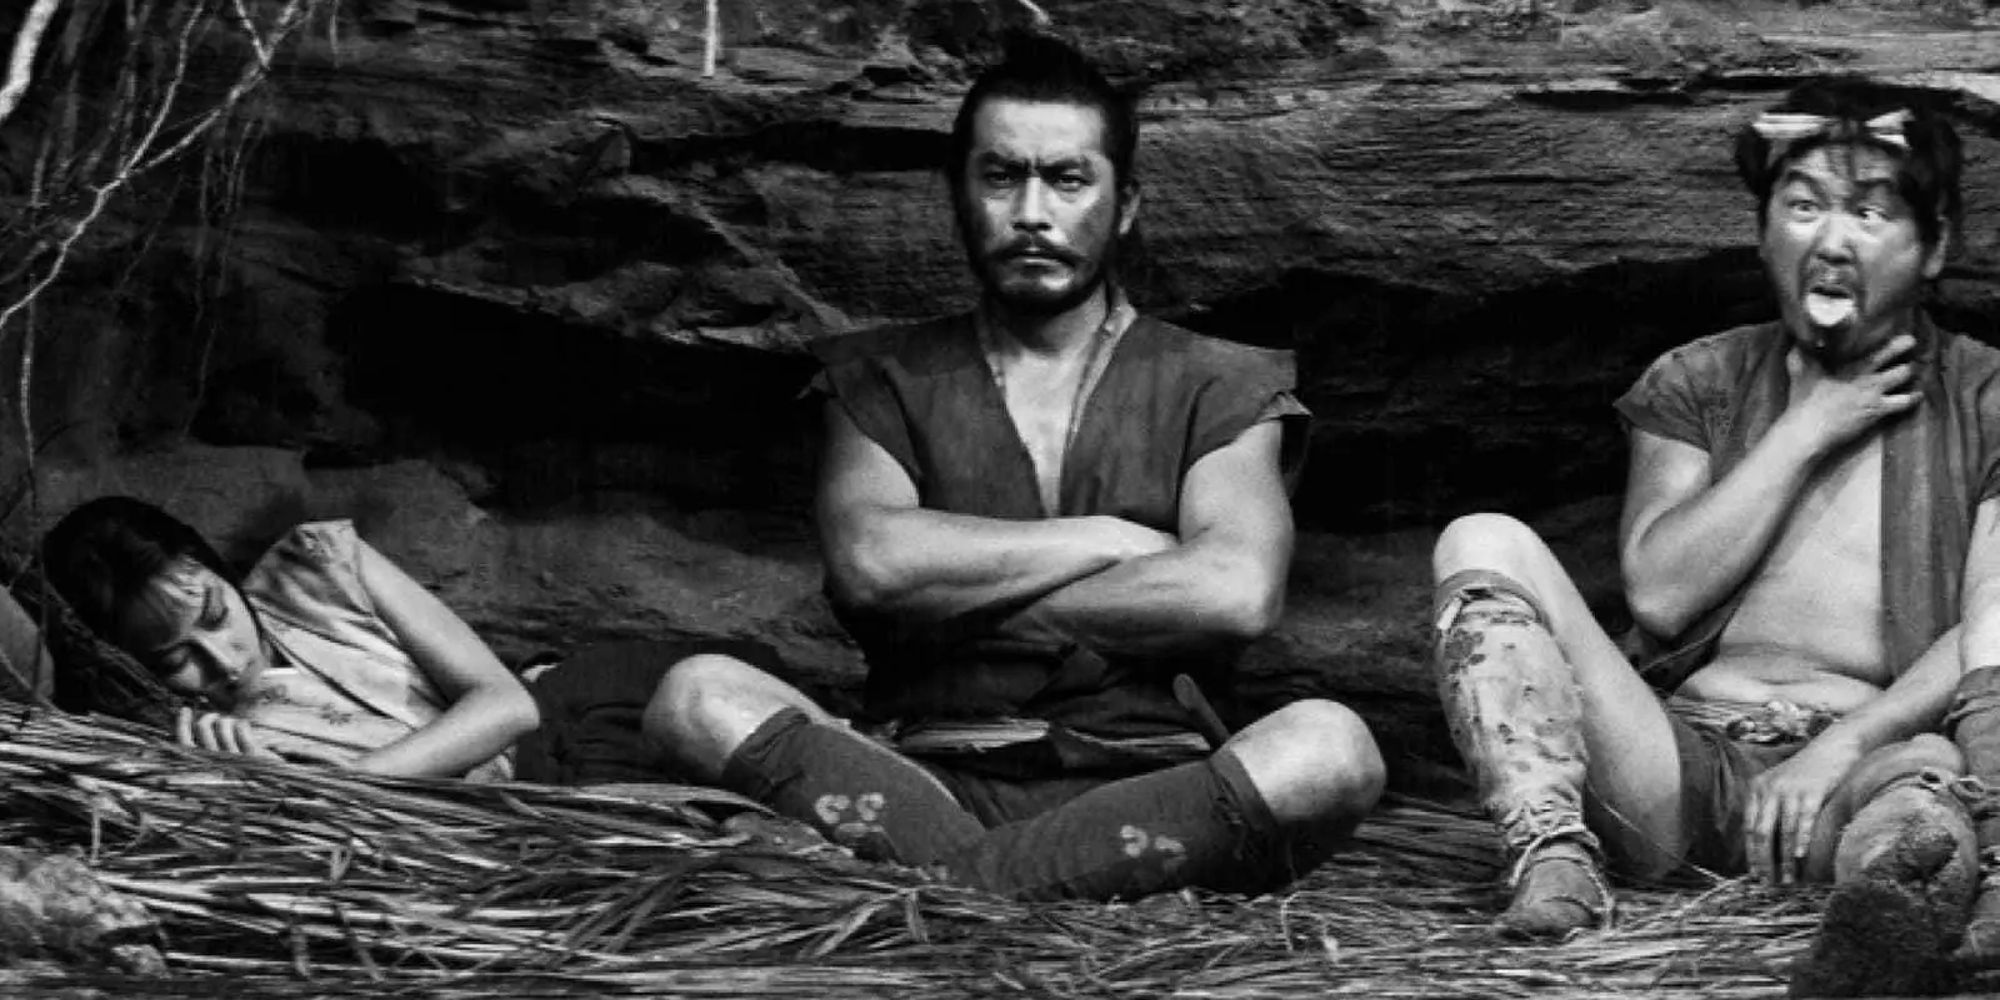 Misa Uehara, Toshiro Mifune, and Minoru Chiaki sitting or laying down in The Hidden Fortress